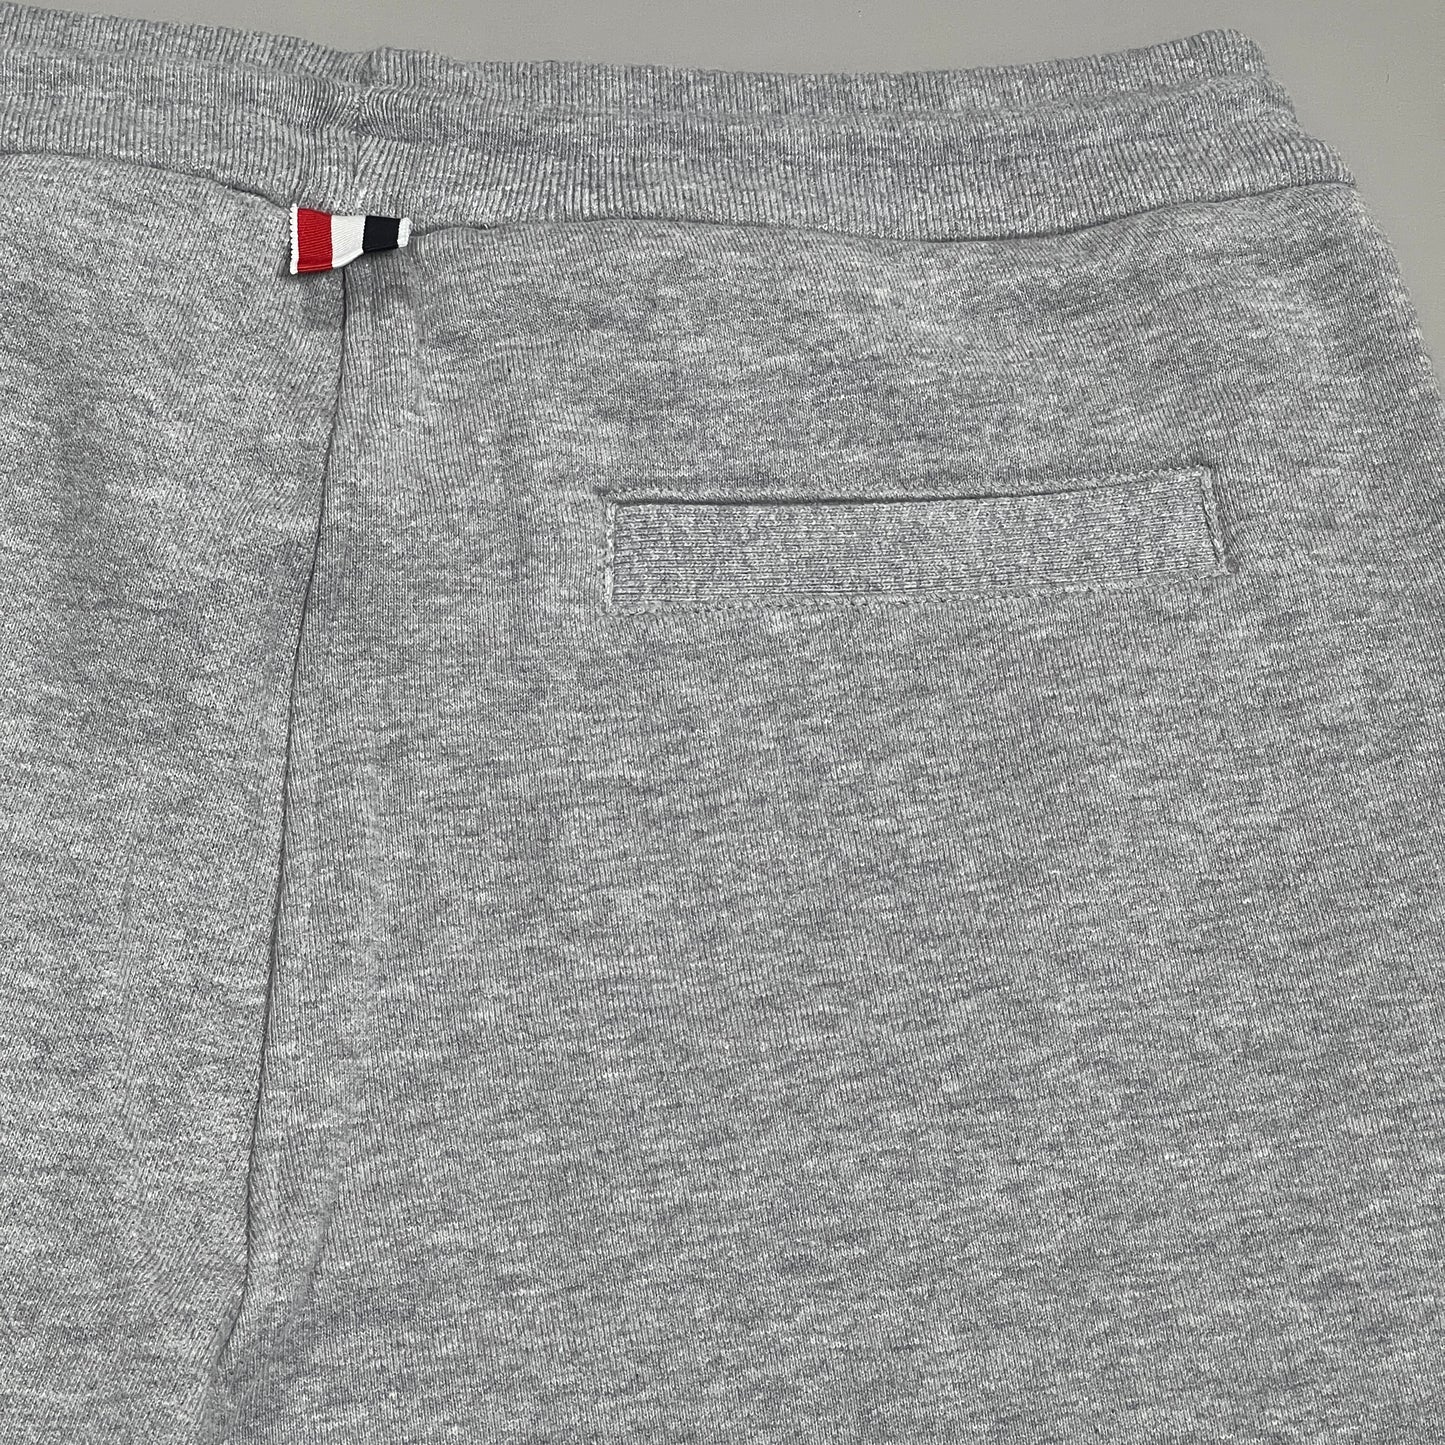 THOM BROWNE Classic Sweat Shorts w/4 Bar Loop Back Light Grey Size 1 (New)